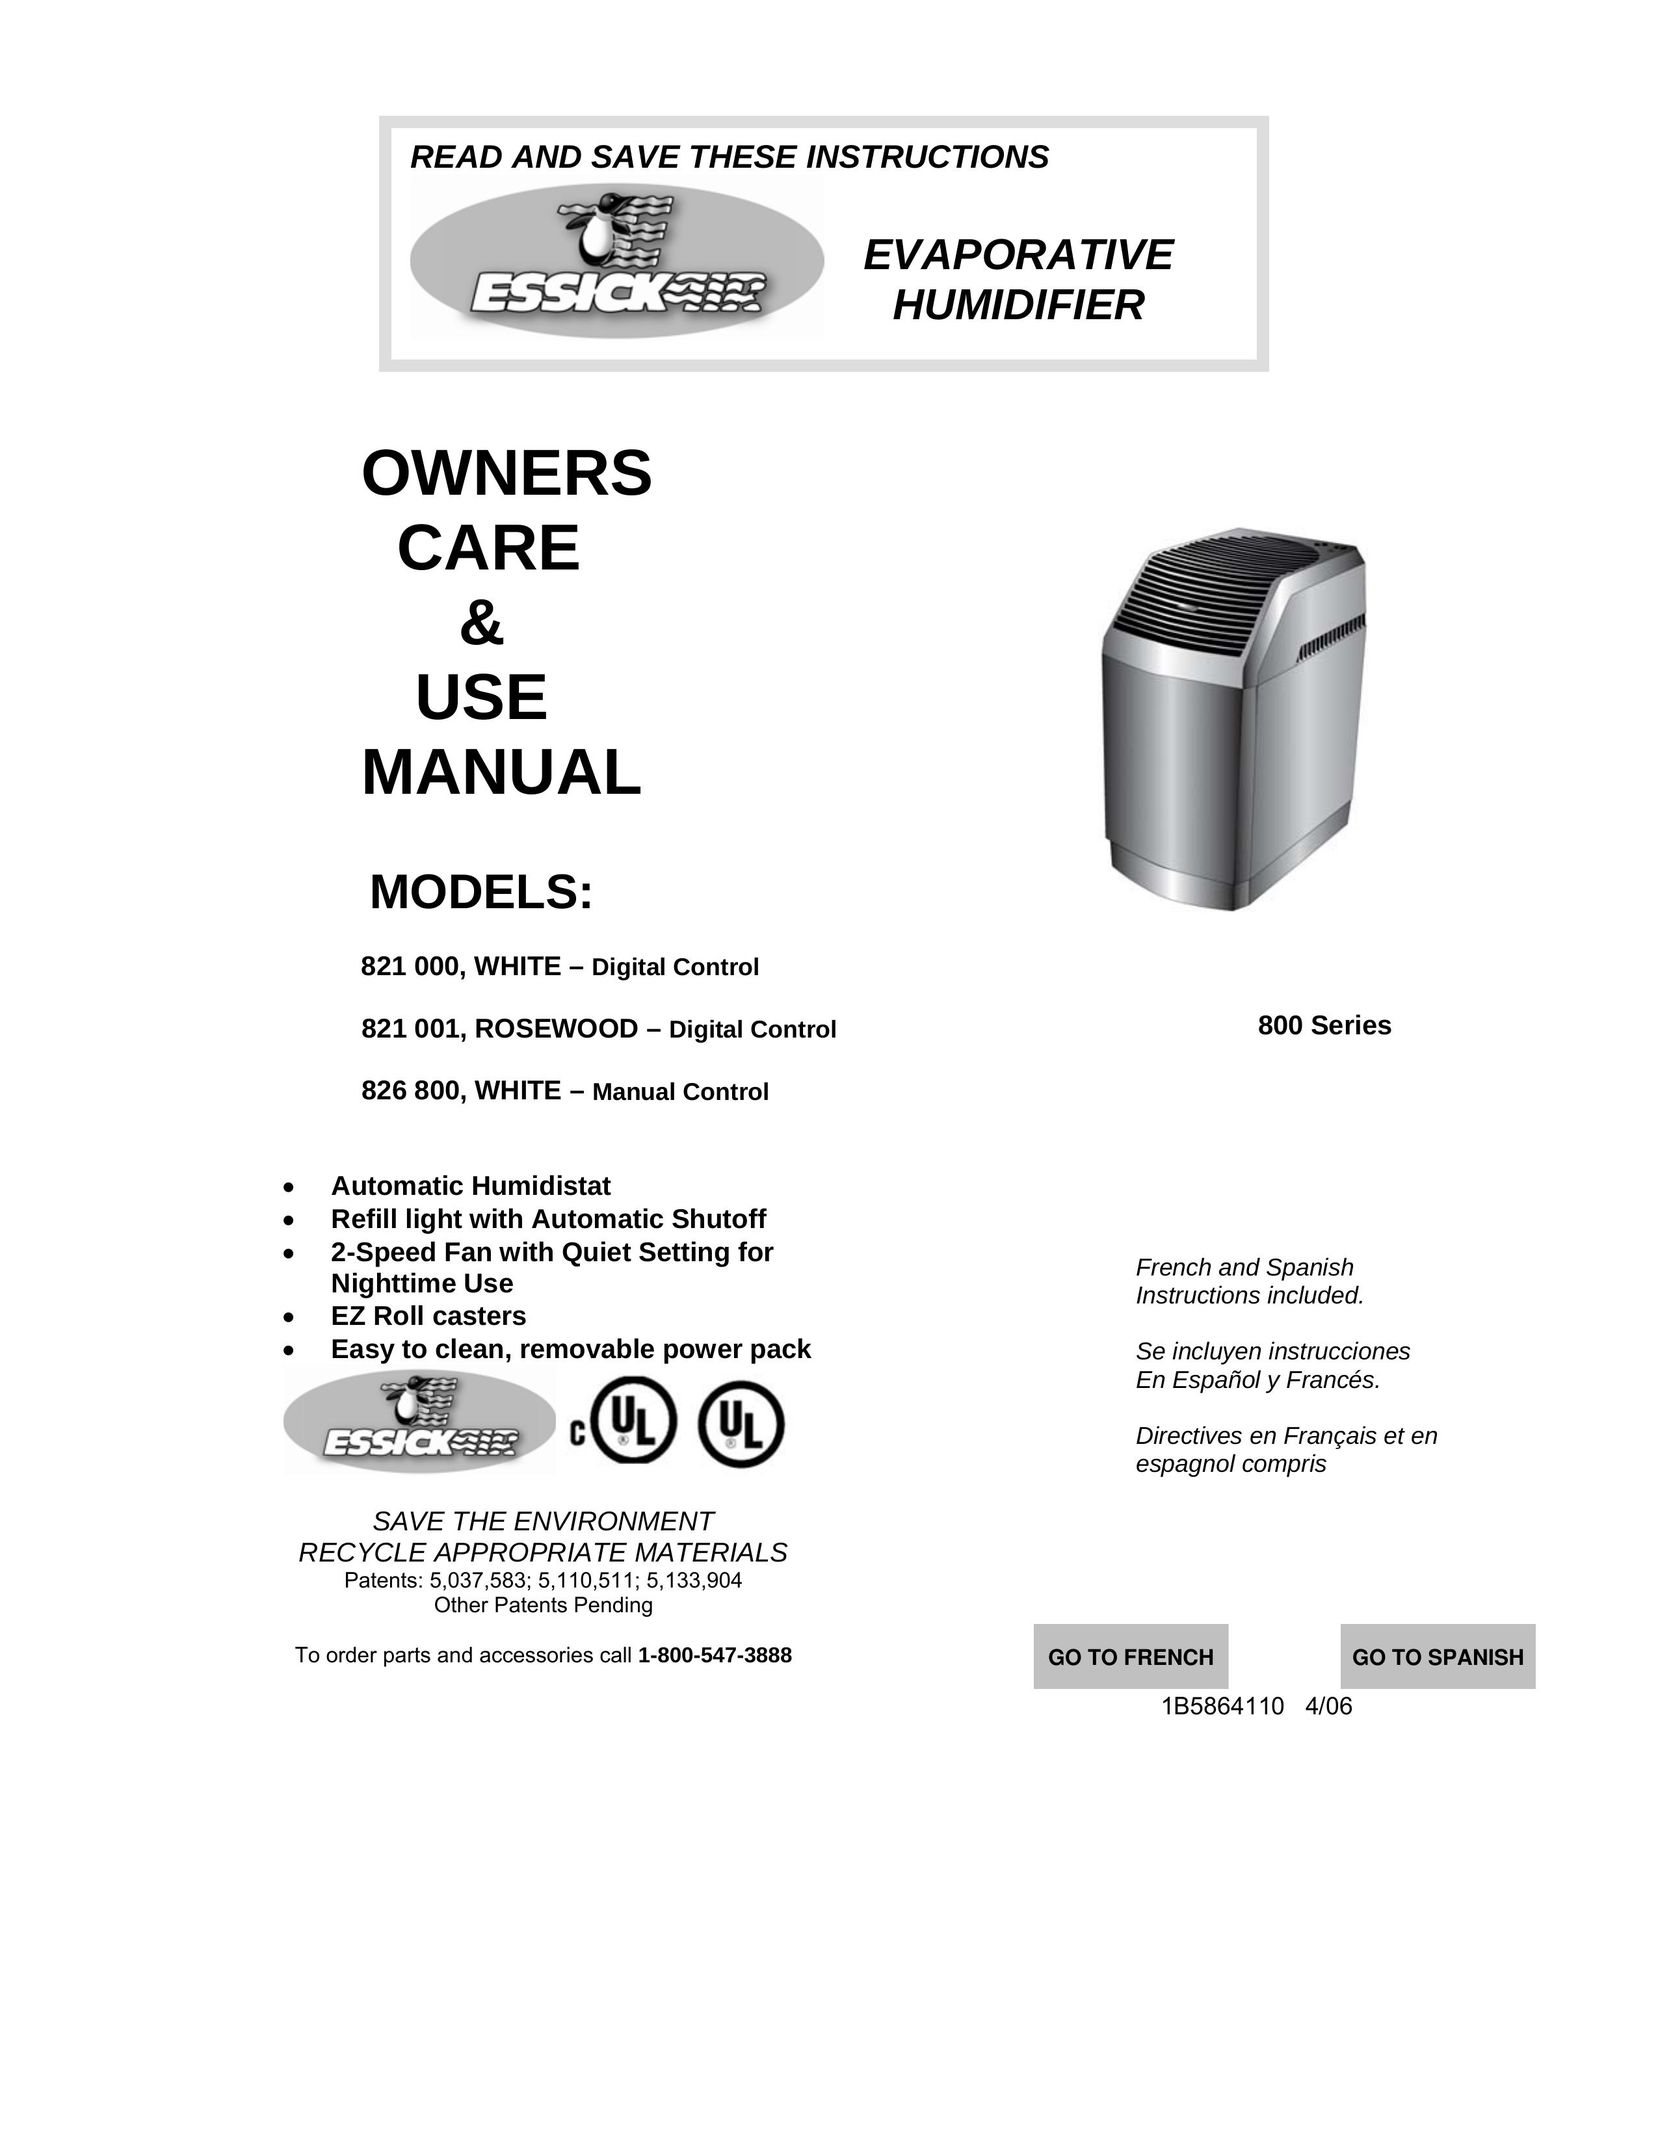 Chemex 821 001 Humidifier User Manual